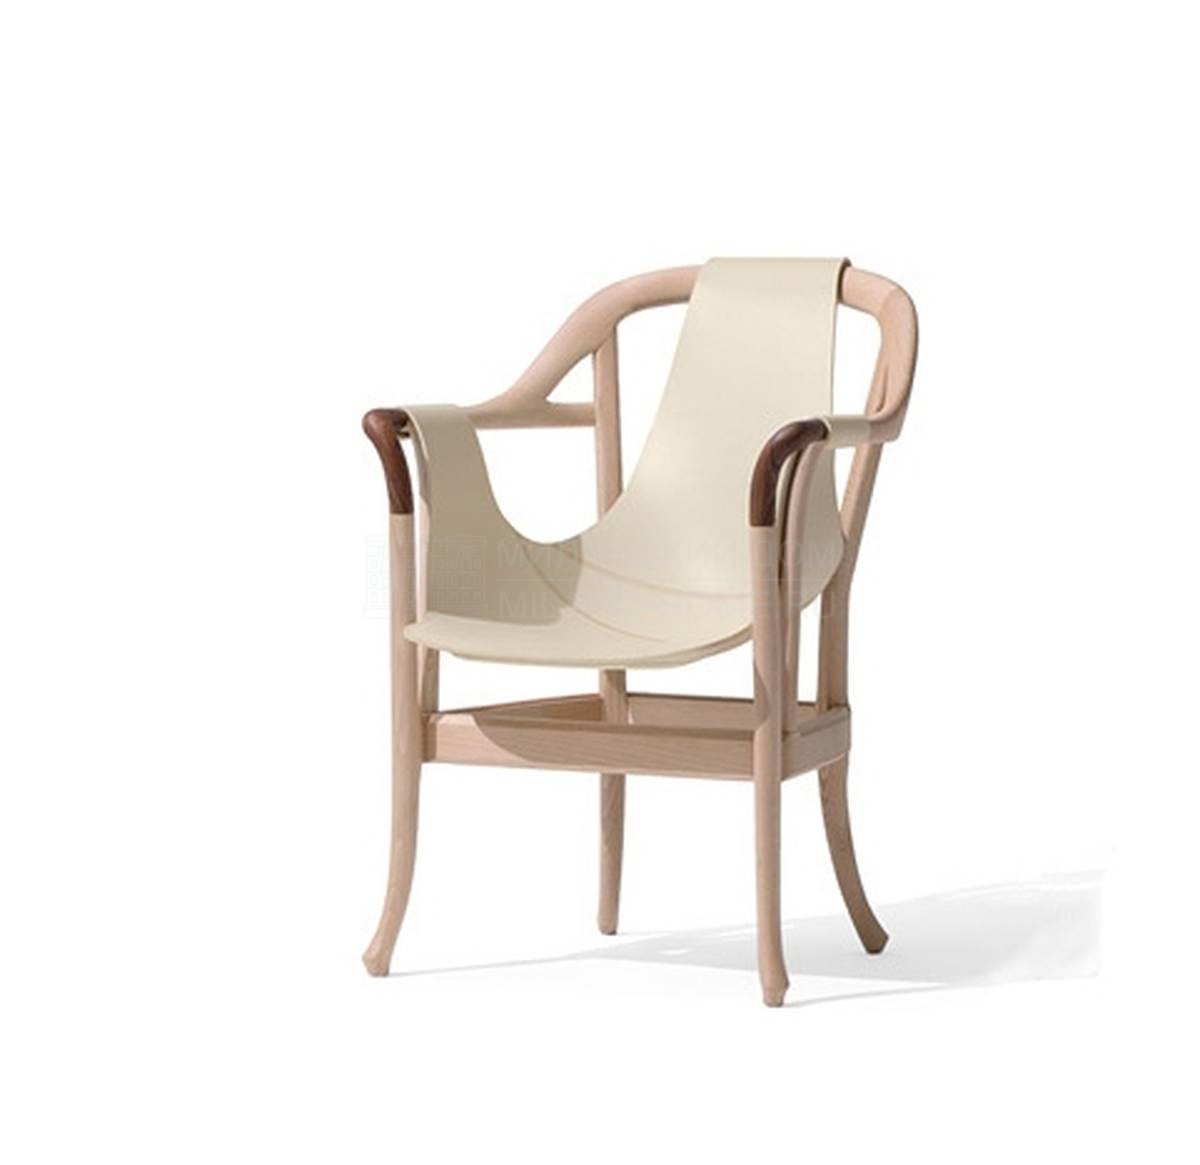 Кожаное кресло Progetti pure narrow / 30220 из Италии фабрики GIORGETTI